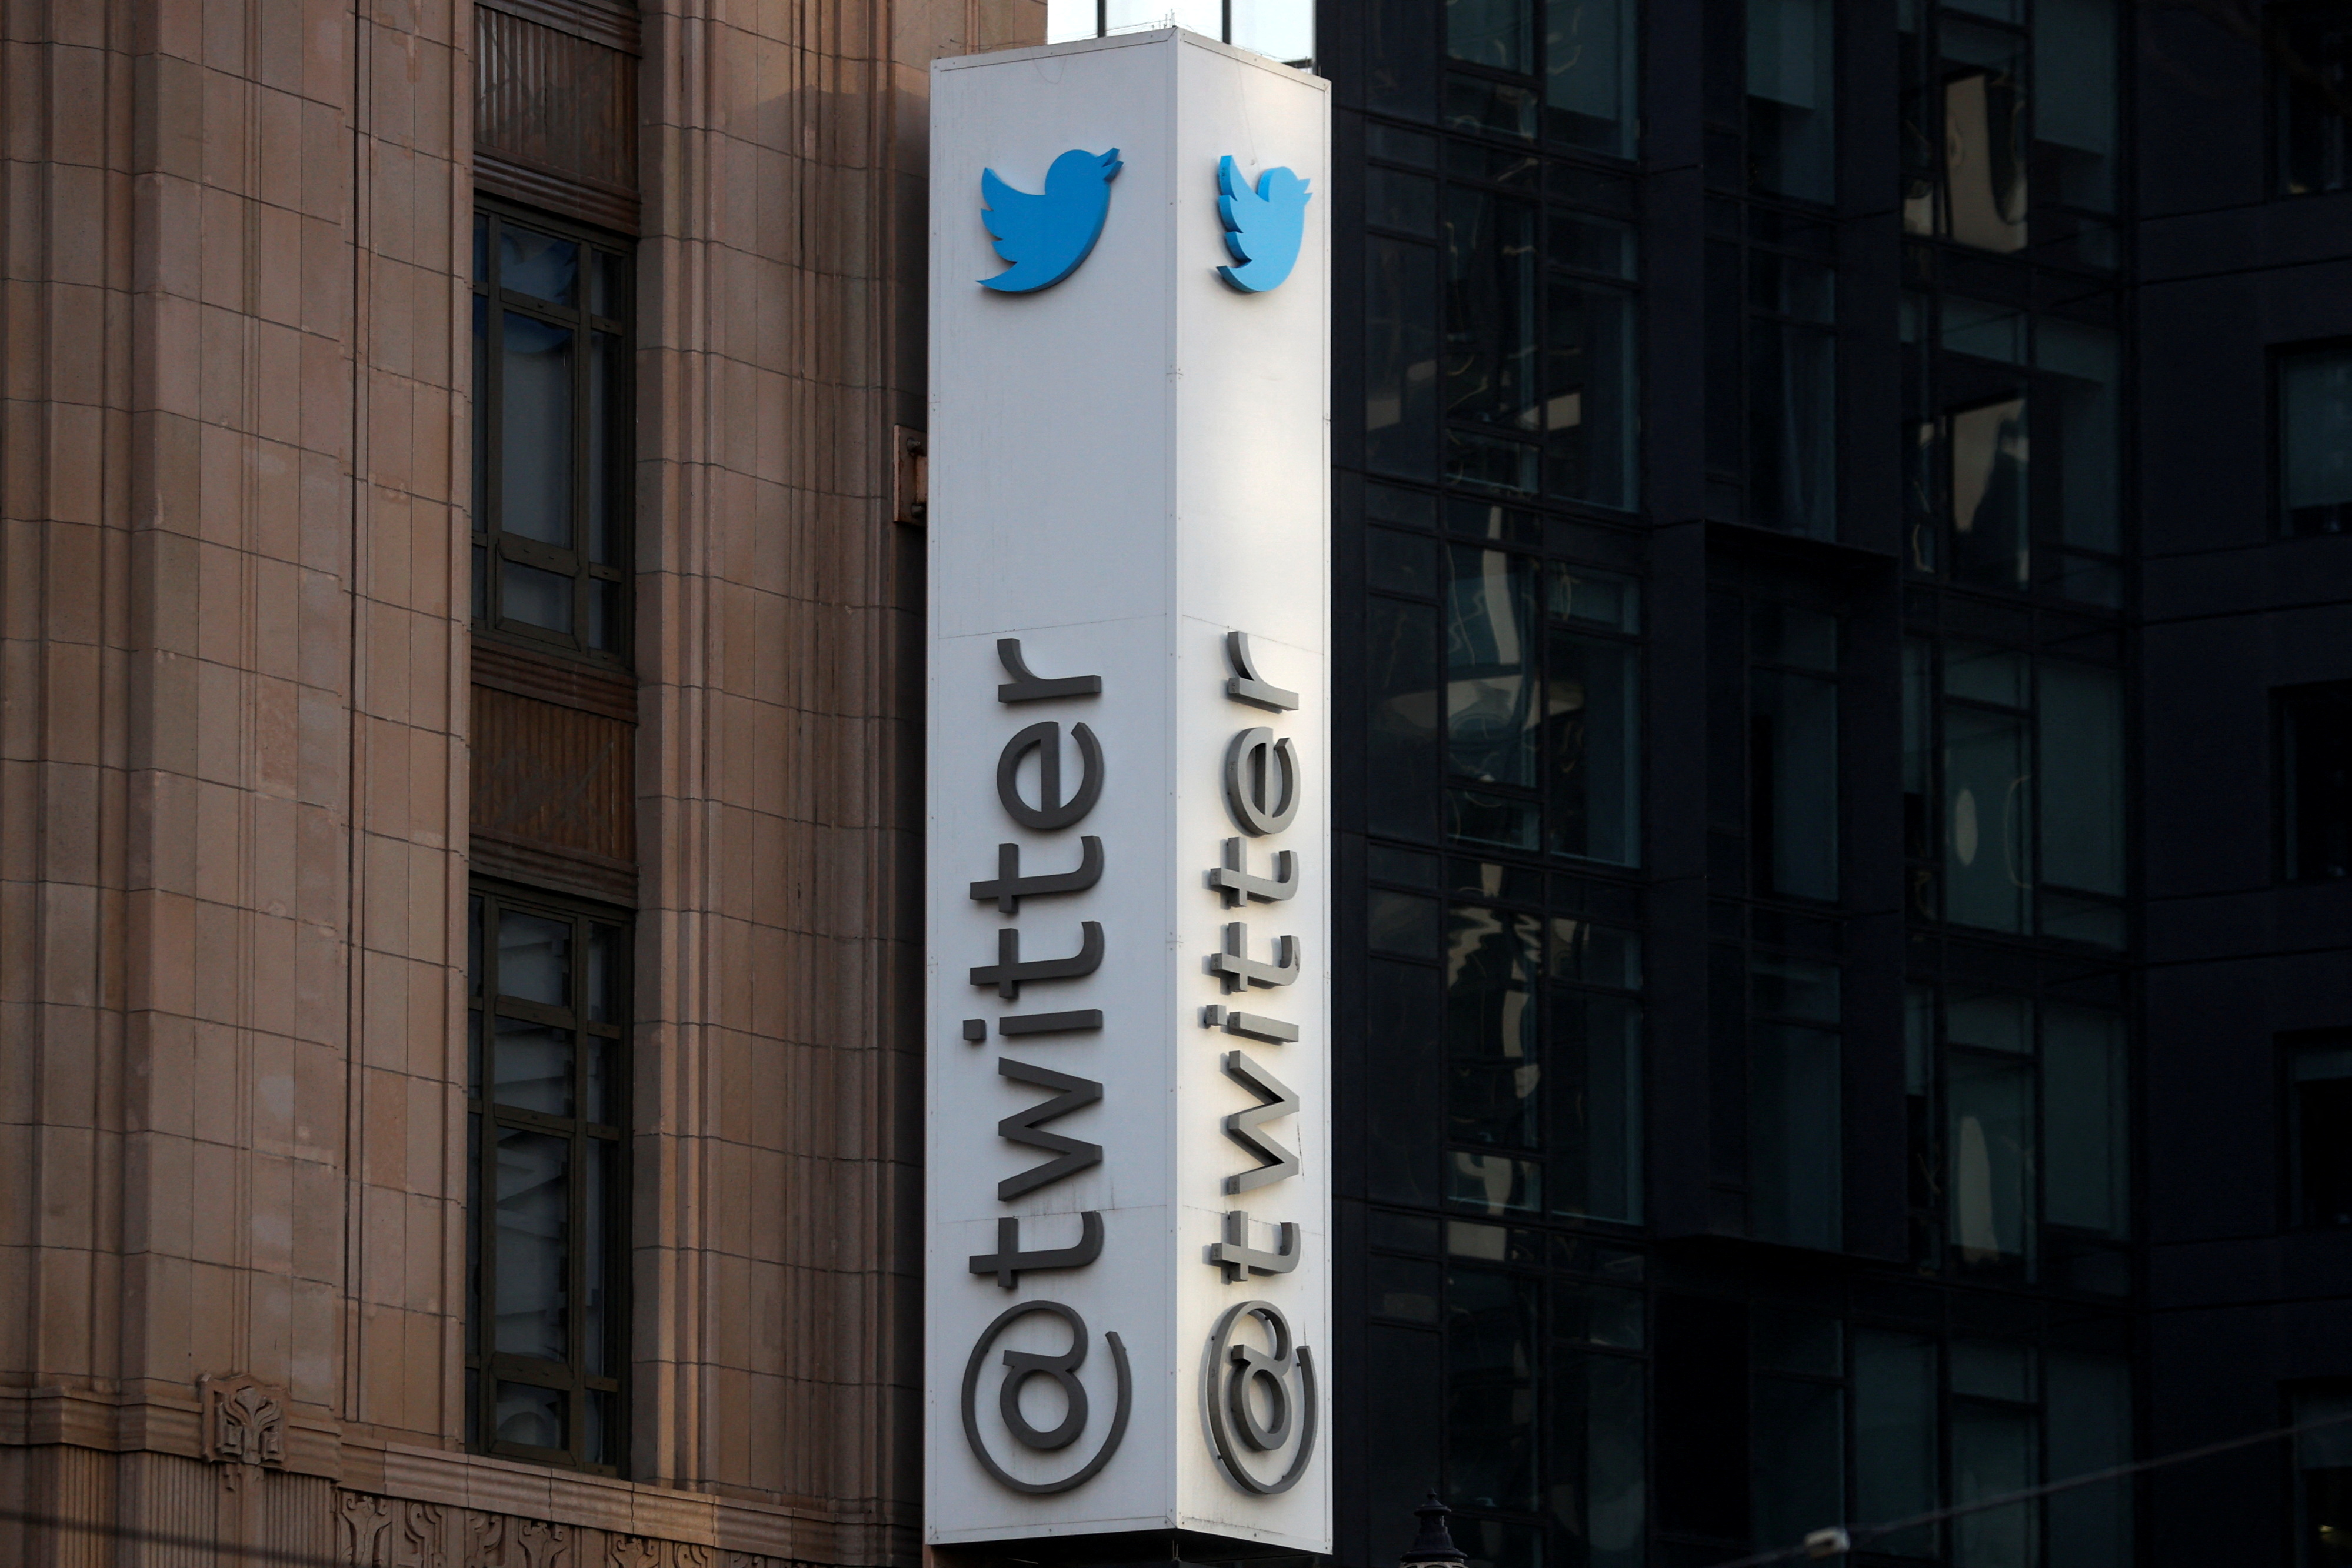 Twitter headquarters in San Francisco